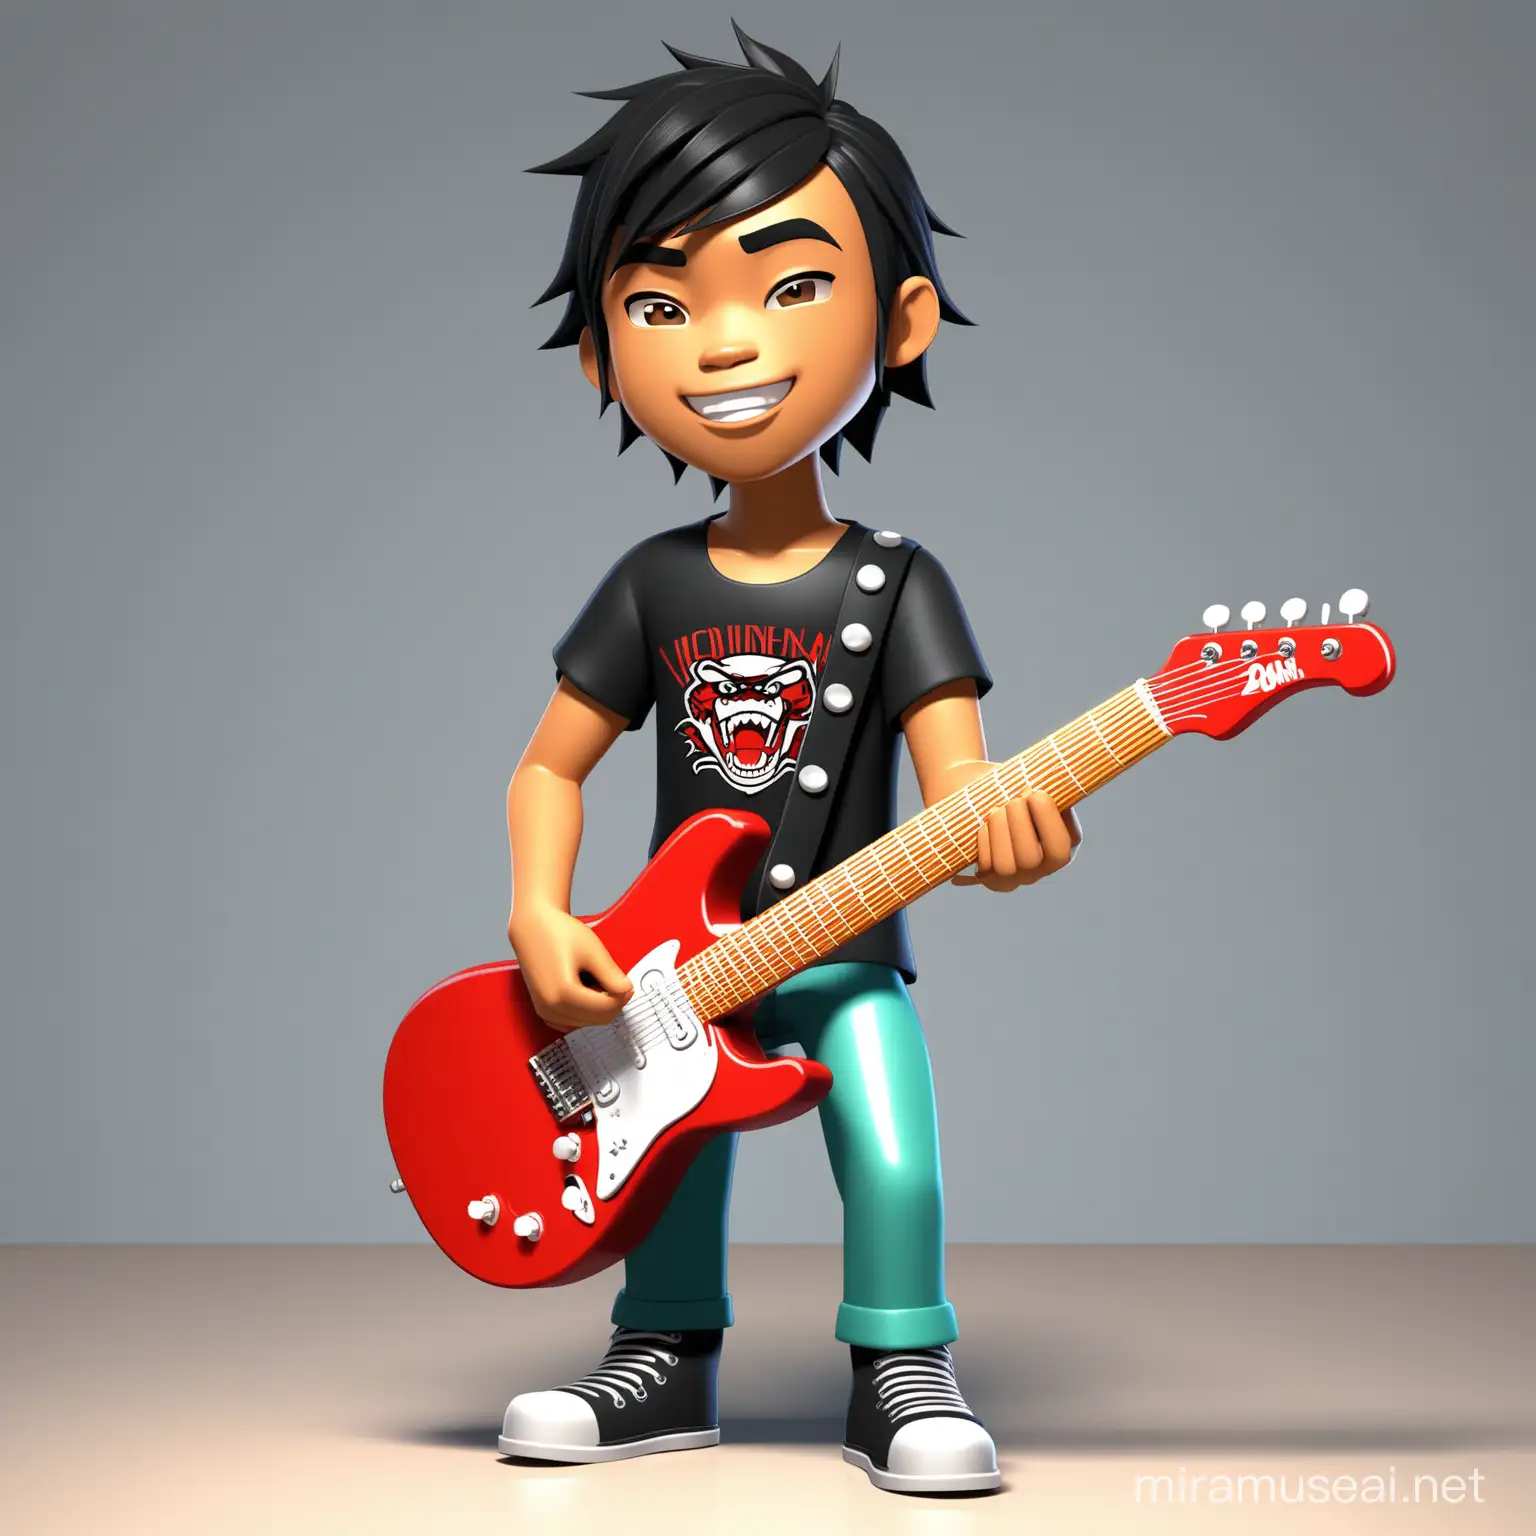 Indonesian Rocker Guitarist in Cartoon Style